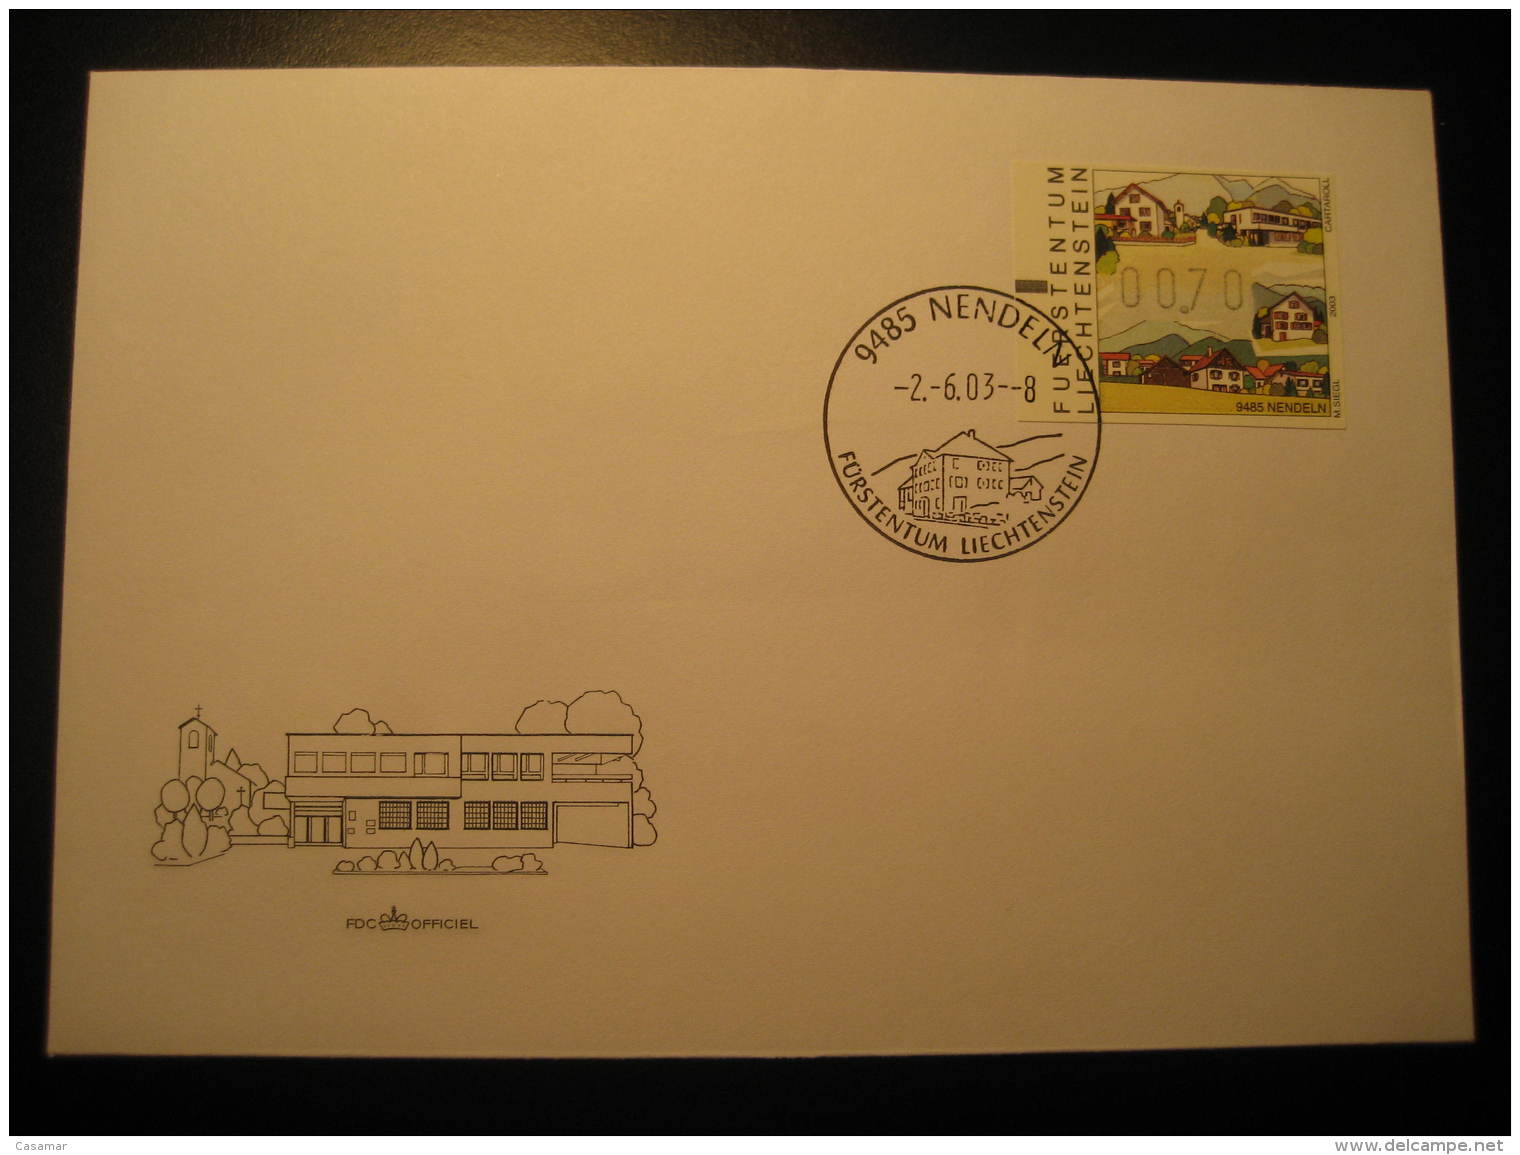 NENDELN Frama Label Distributeurs 2003 Cancel Cover Liechtenstein - Storia Postale